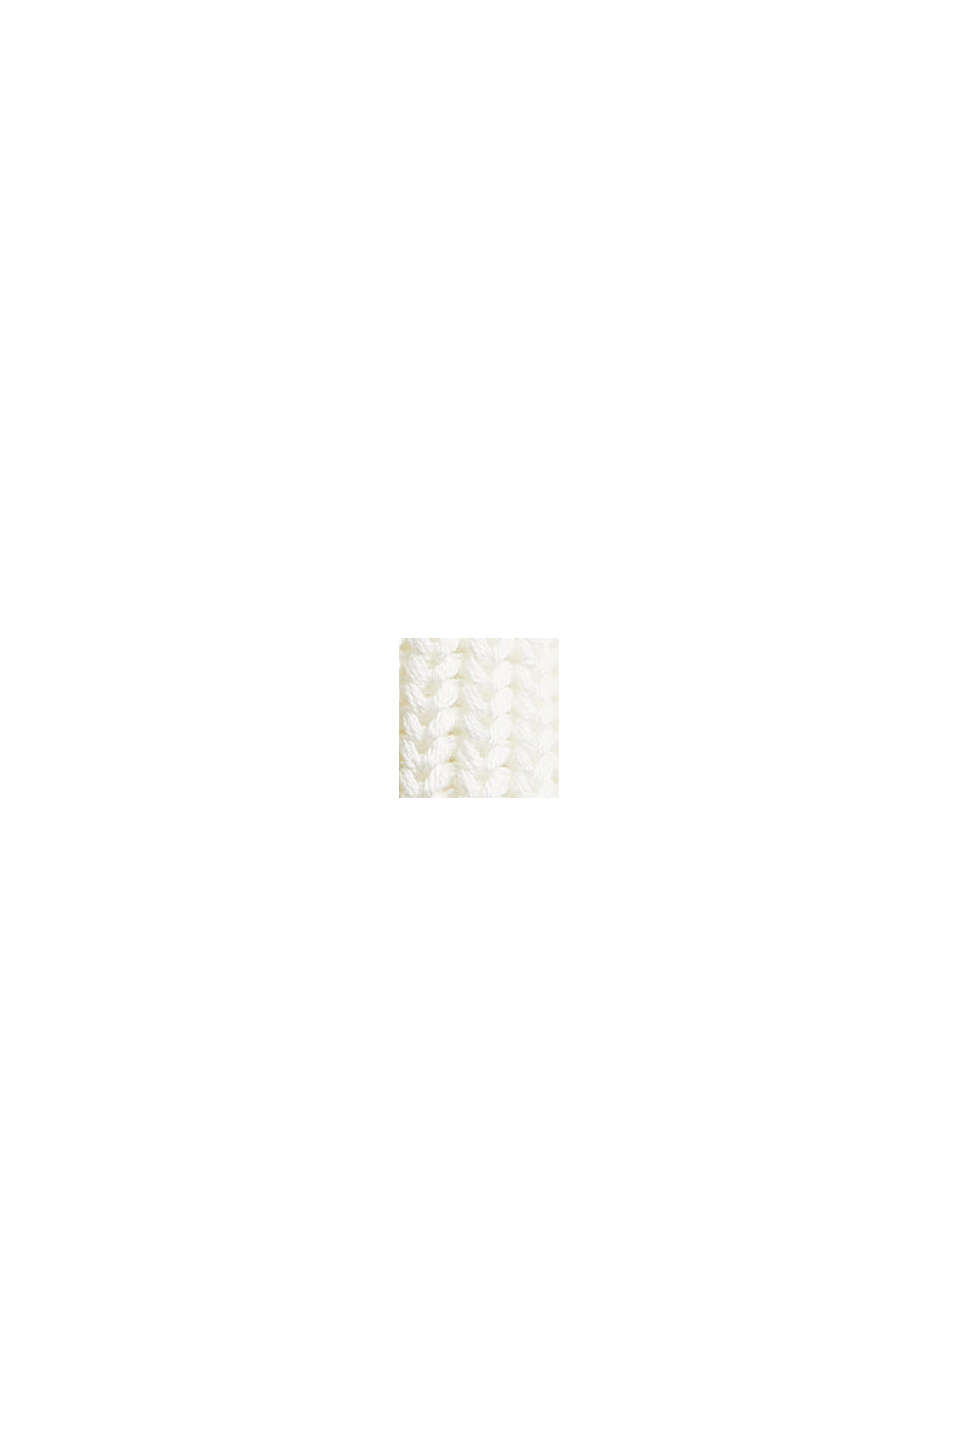 Pulovr ze vzorované pleteniny z bio bavlny, OFF WHITE, swatch